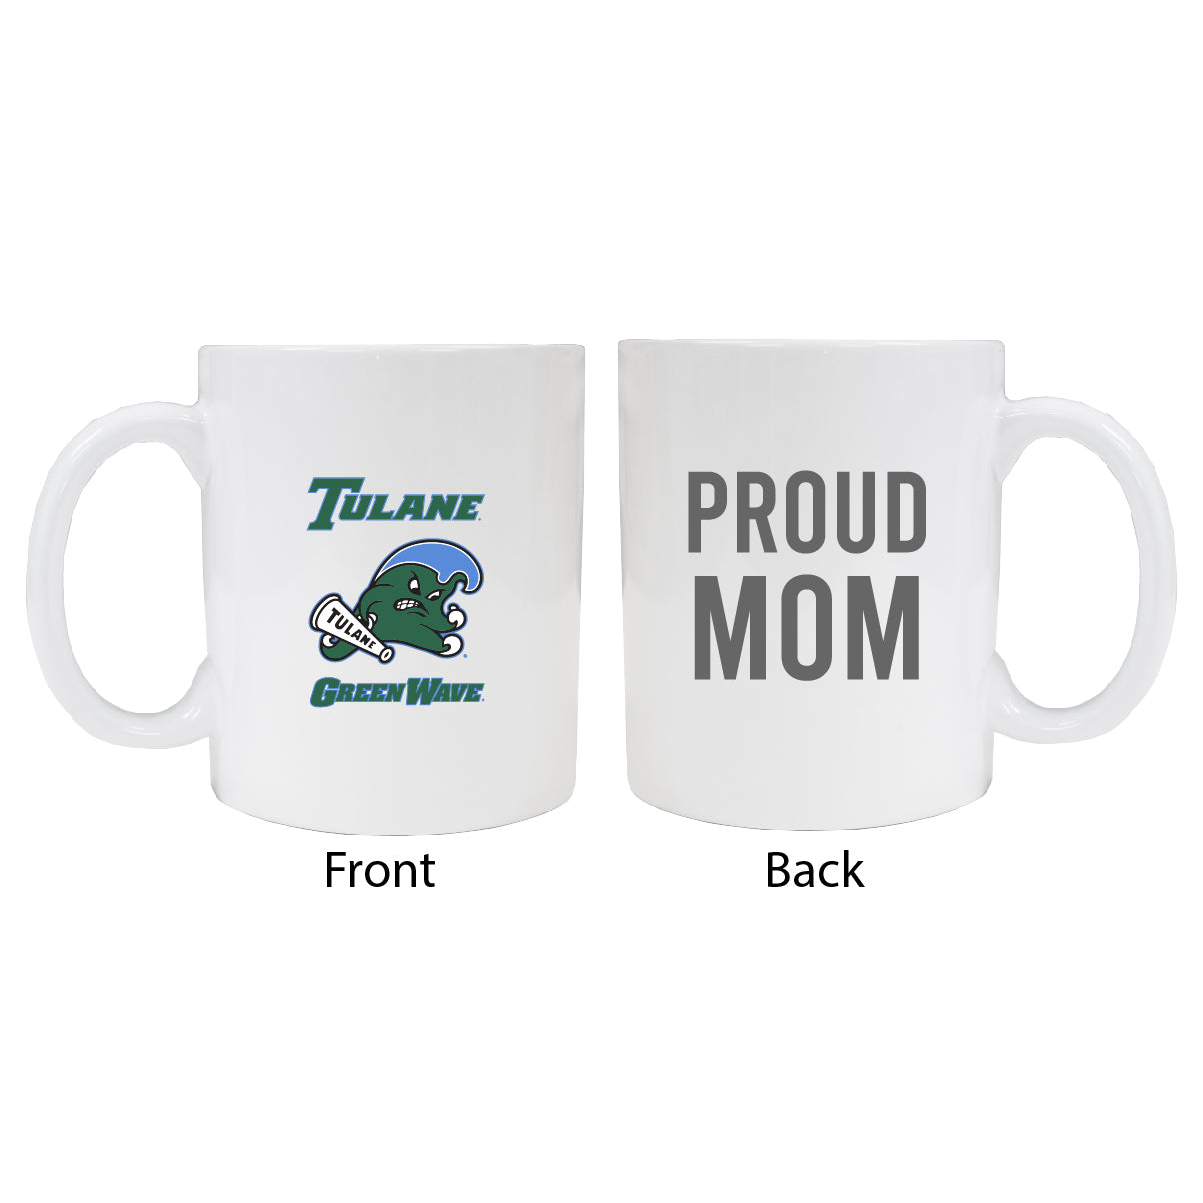 Tulane University Green Wave Proud Mom Ceramic Coffee Mug - White (2 Pack)